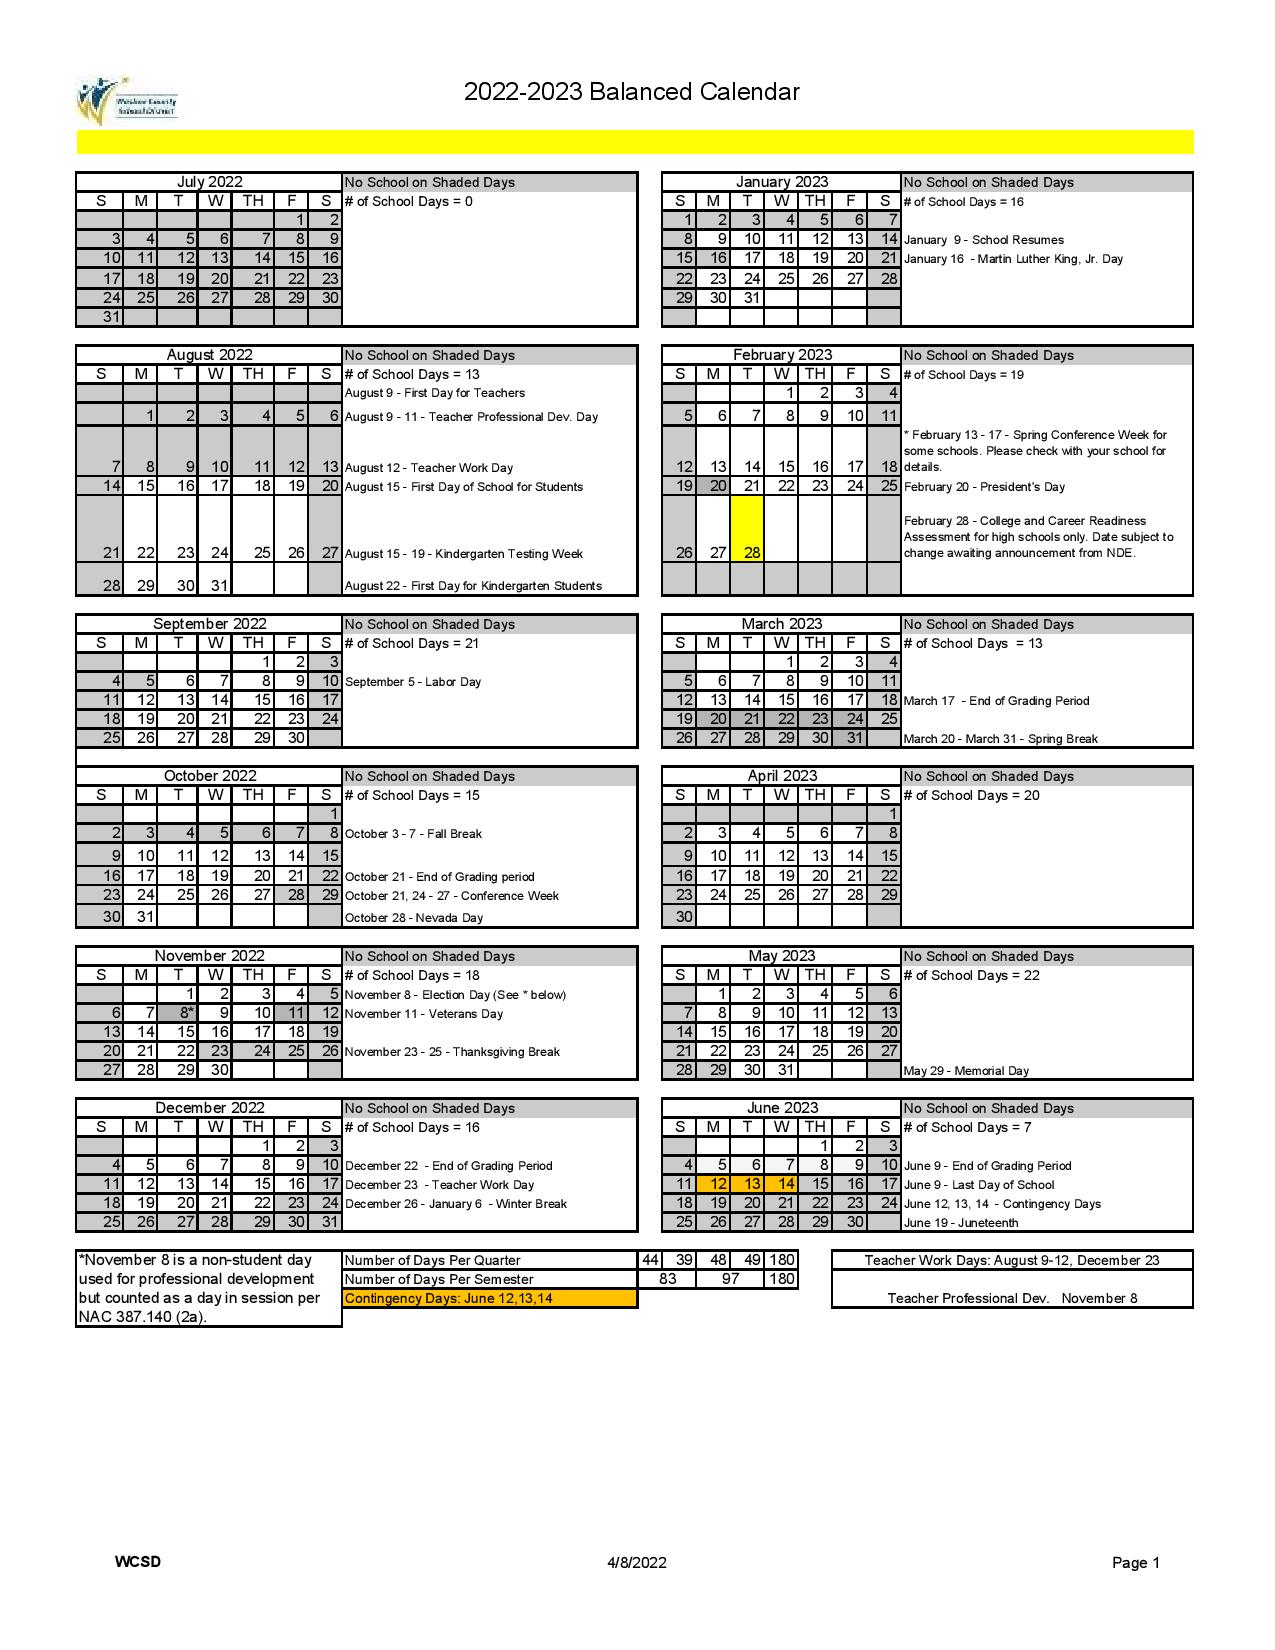 washoe-county-school-district-calendar-2022-2023